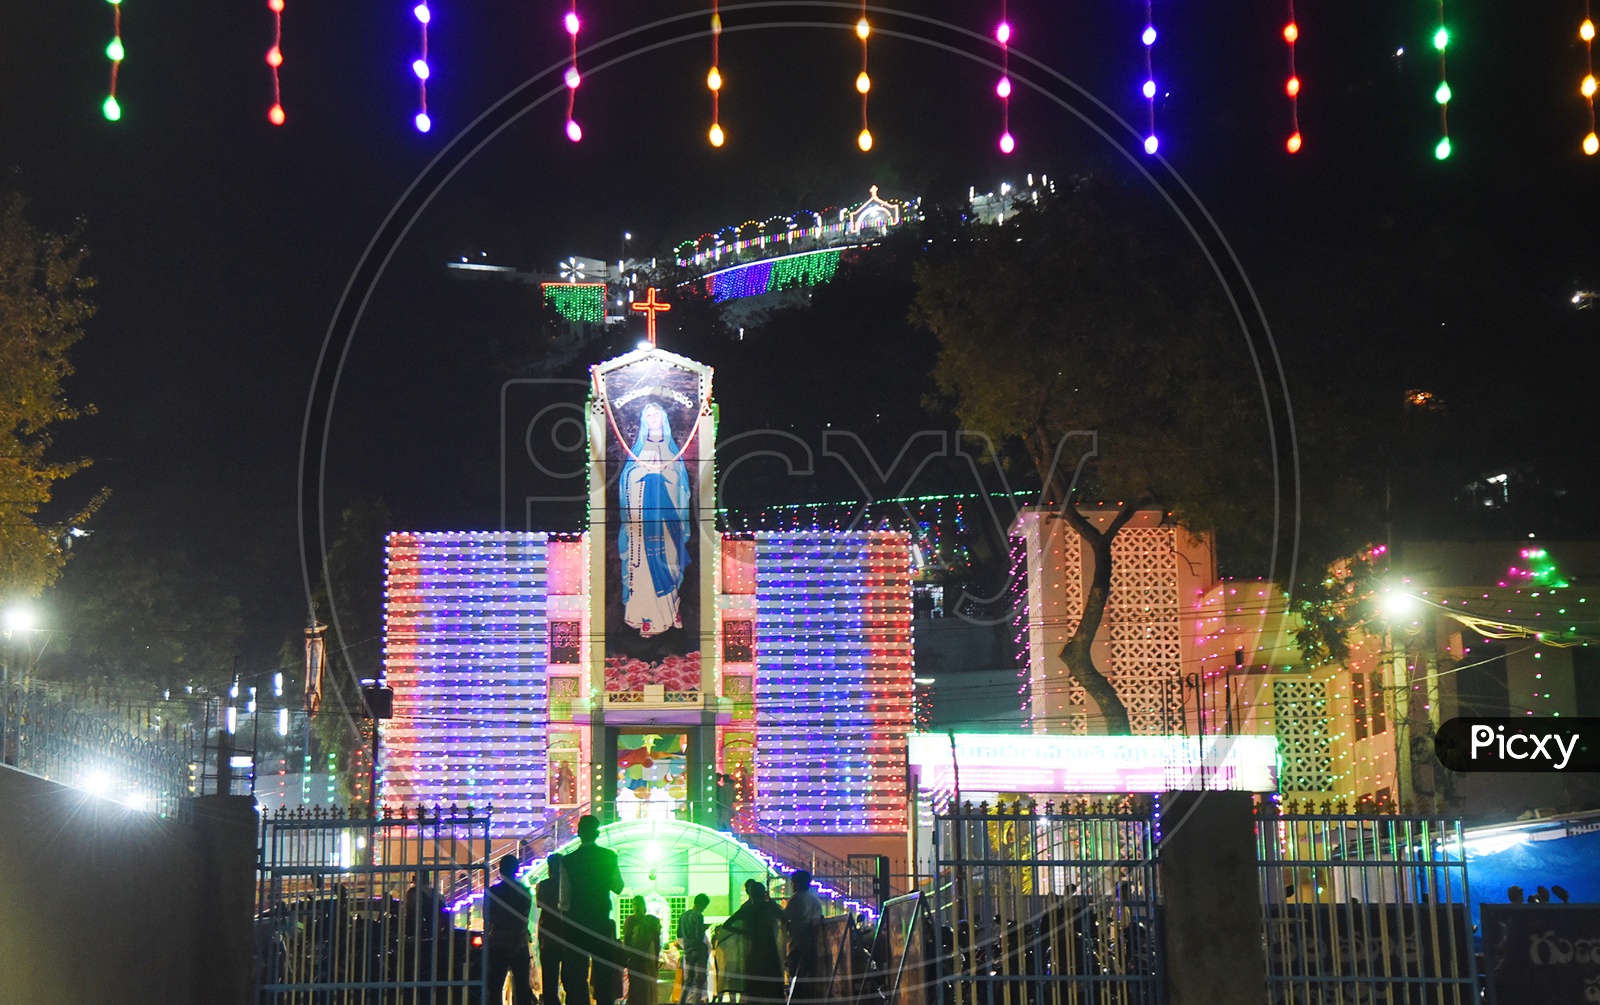 A view of Gunadala matha shrine decorated with led lights